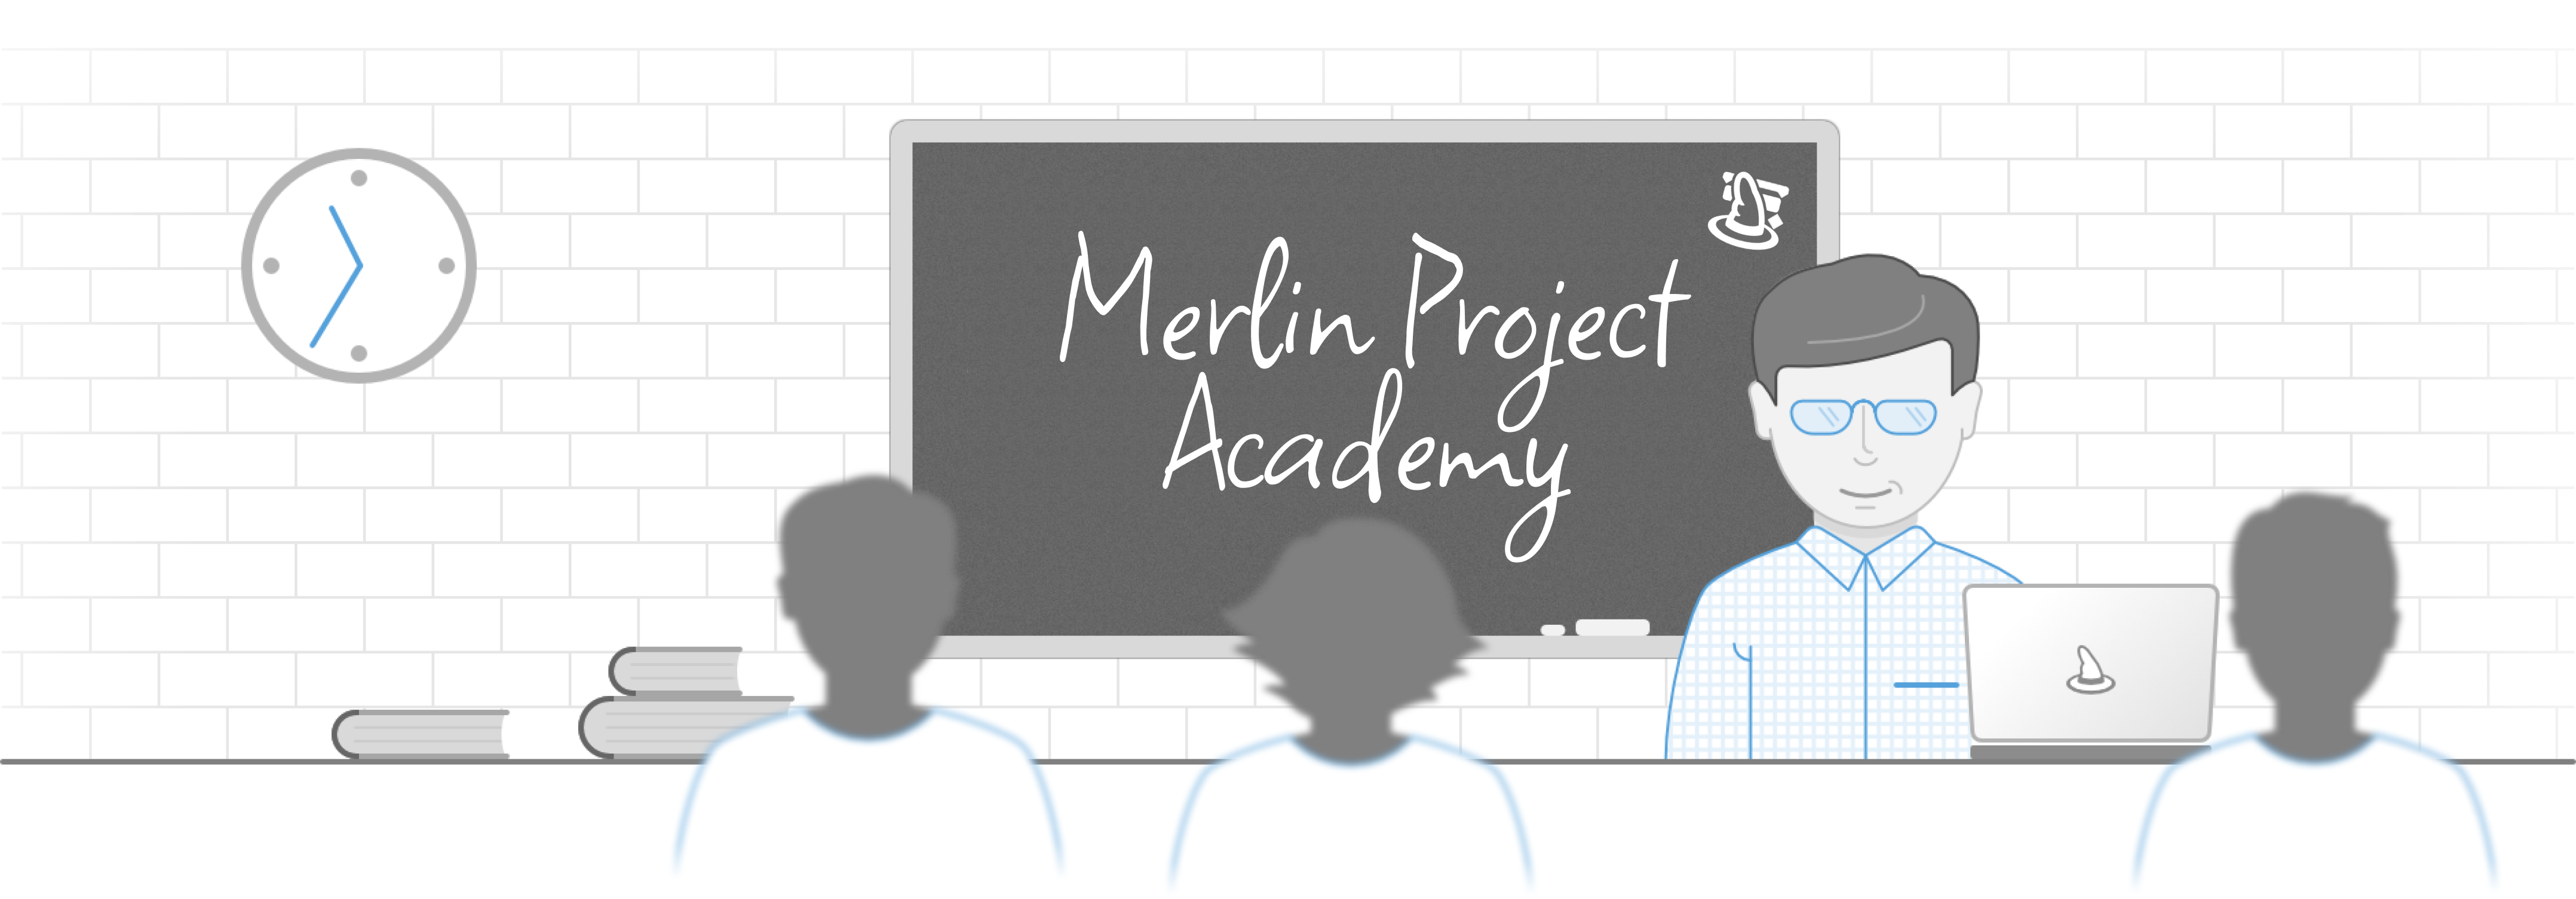 Bienvenue à la Merlin Project Academy